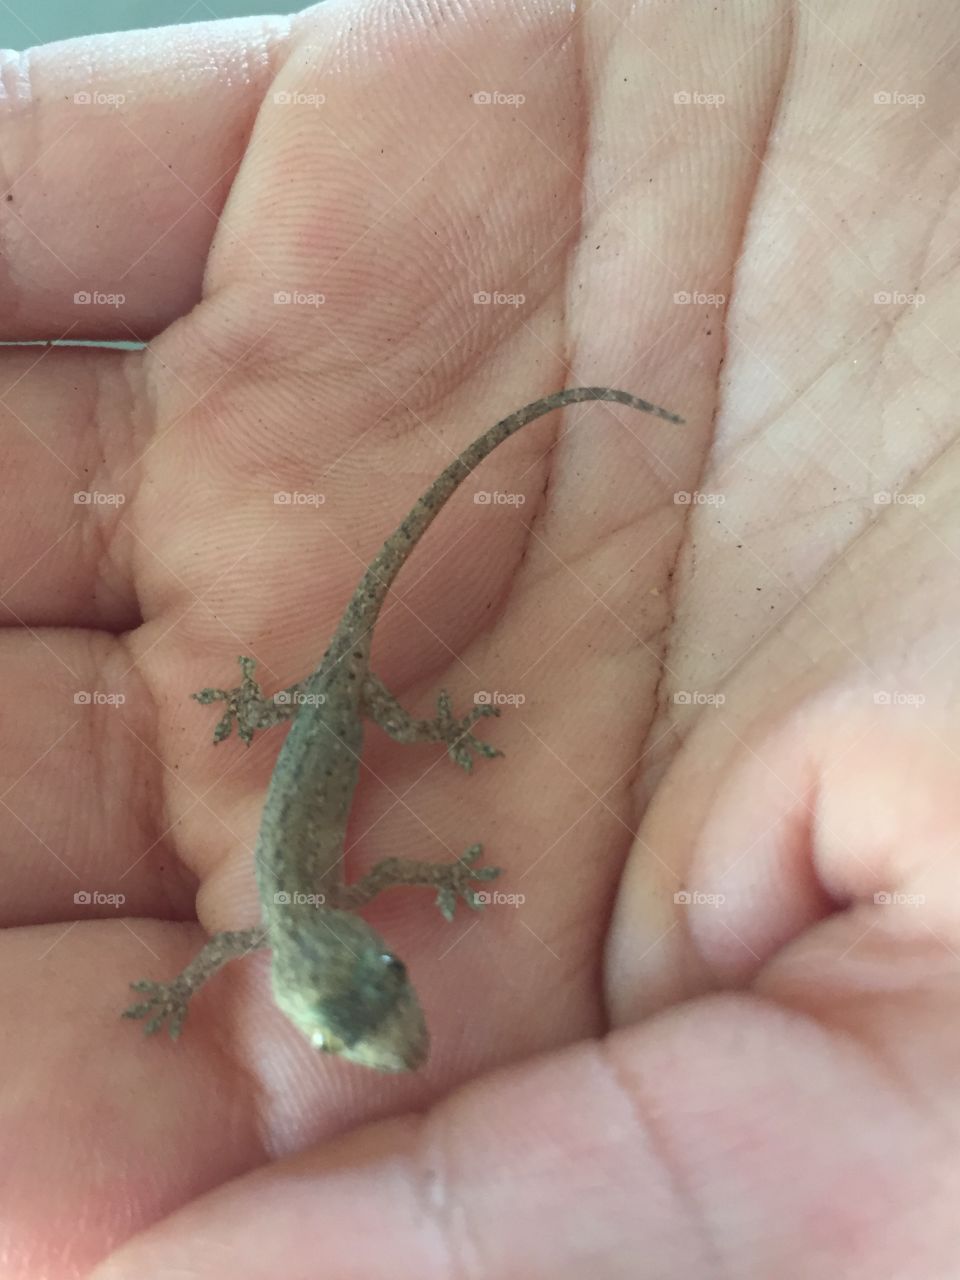 Baby gecko 